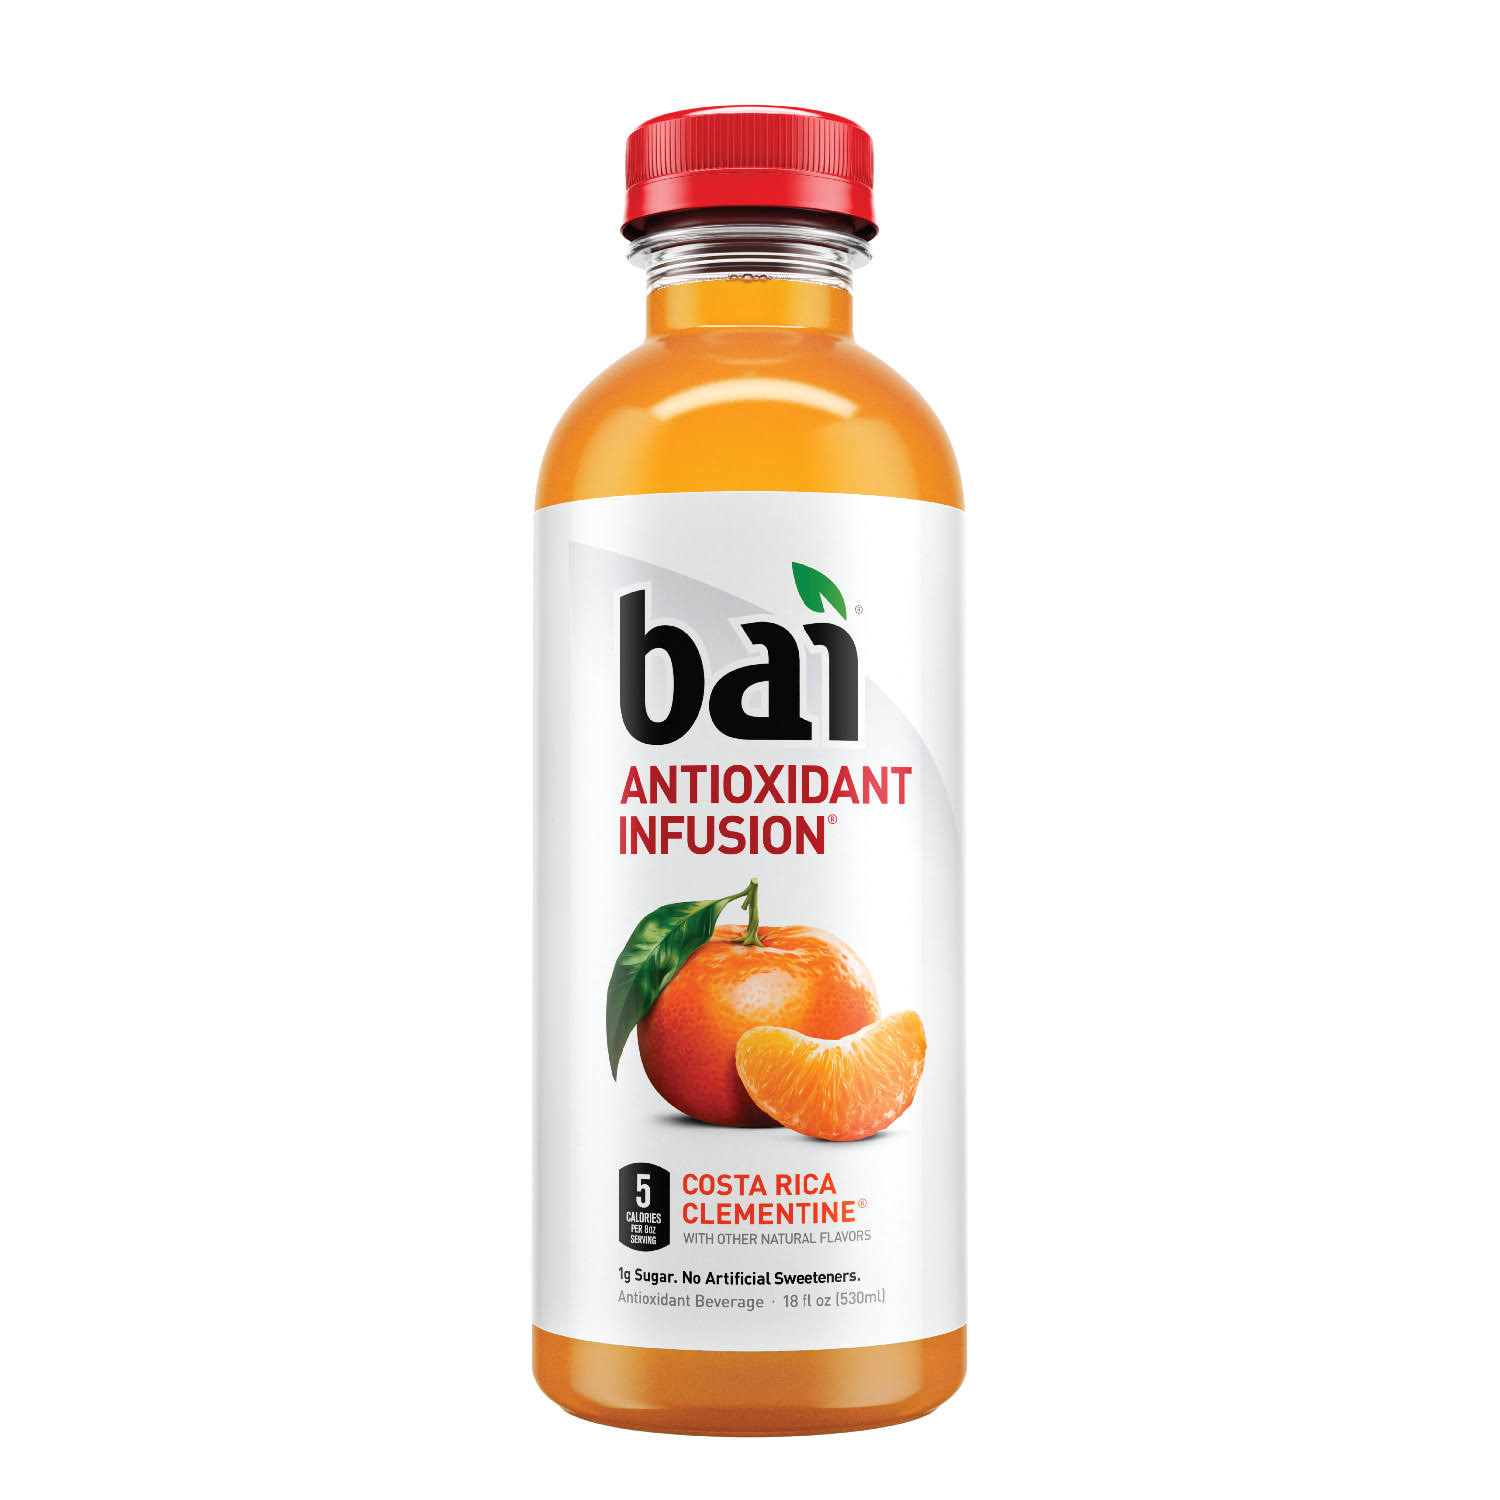 Bai5 Antioxidant Infusions Costa Rica Celementine Juice - 532ml